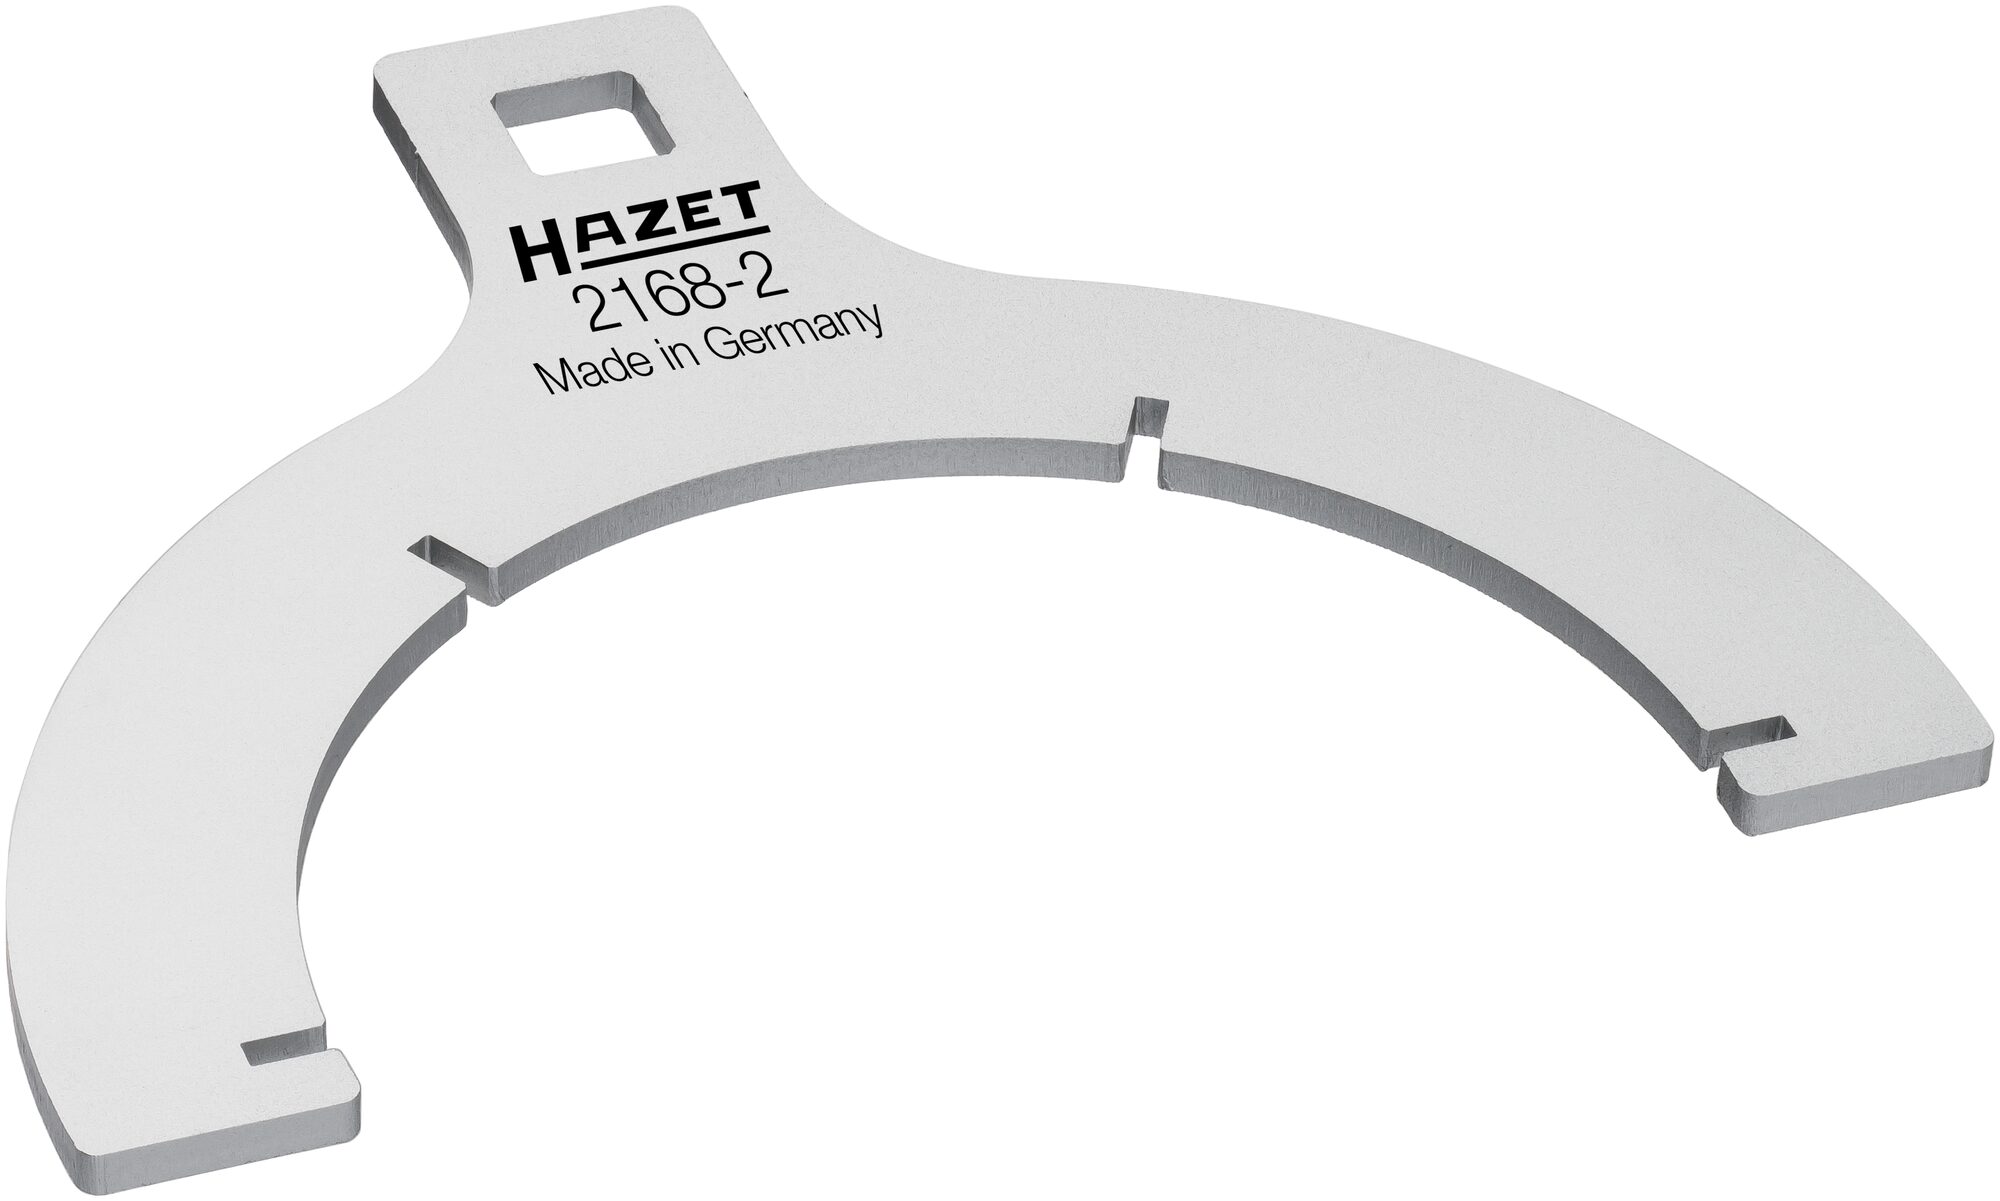 HAZET Kraftstofffilter-Lösewerkzeug 2168-2 · Vierkant hohl 12,5 mm (1/2 Zoll) · Rillenprofil · 160 mm